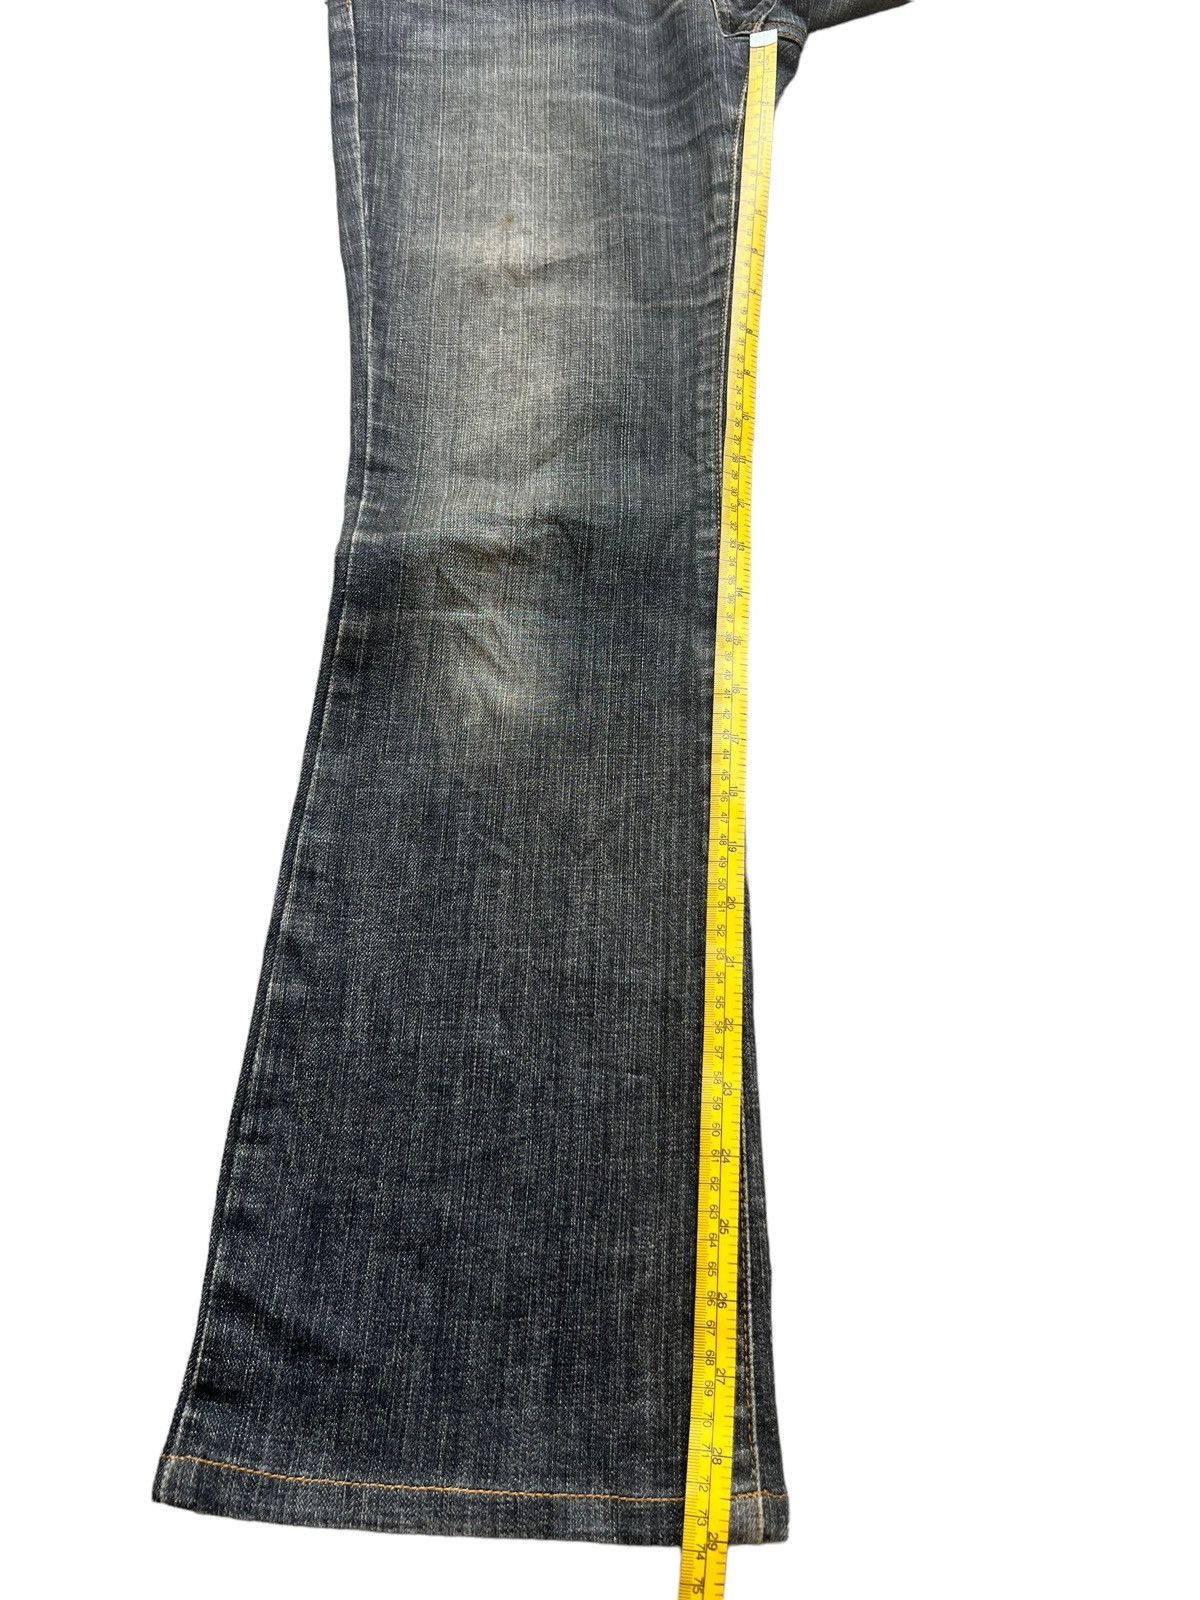 Uniqlo Black Low Rise Bootcut Flare Denim Jeans 30x29 - 12